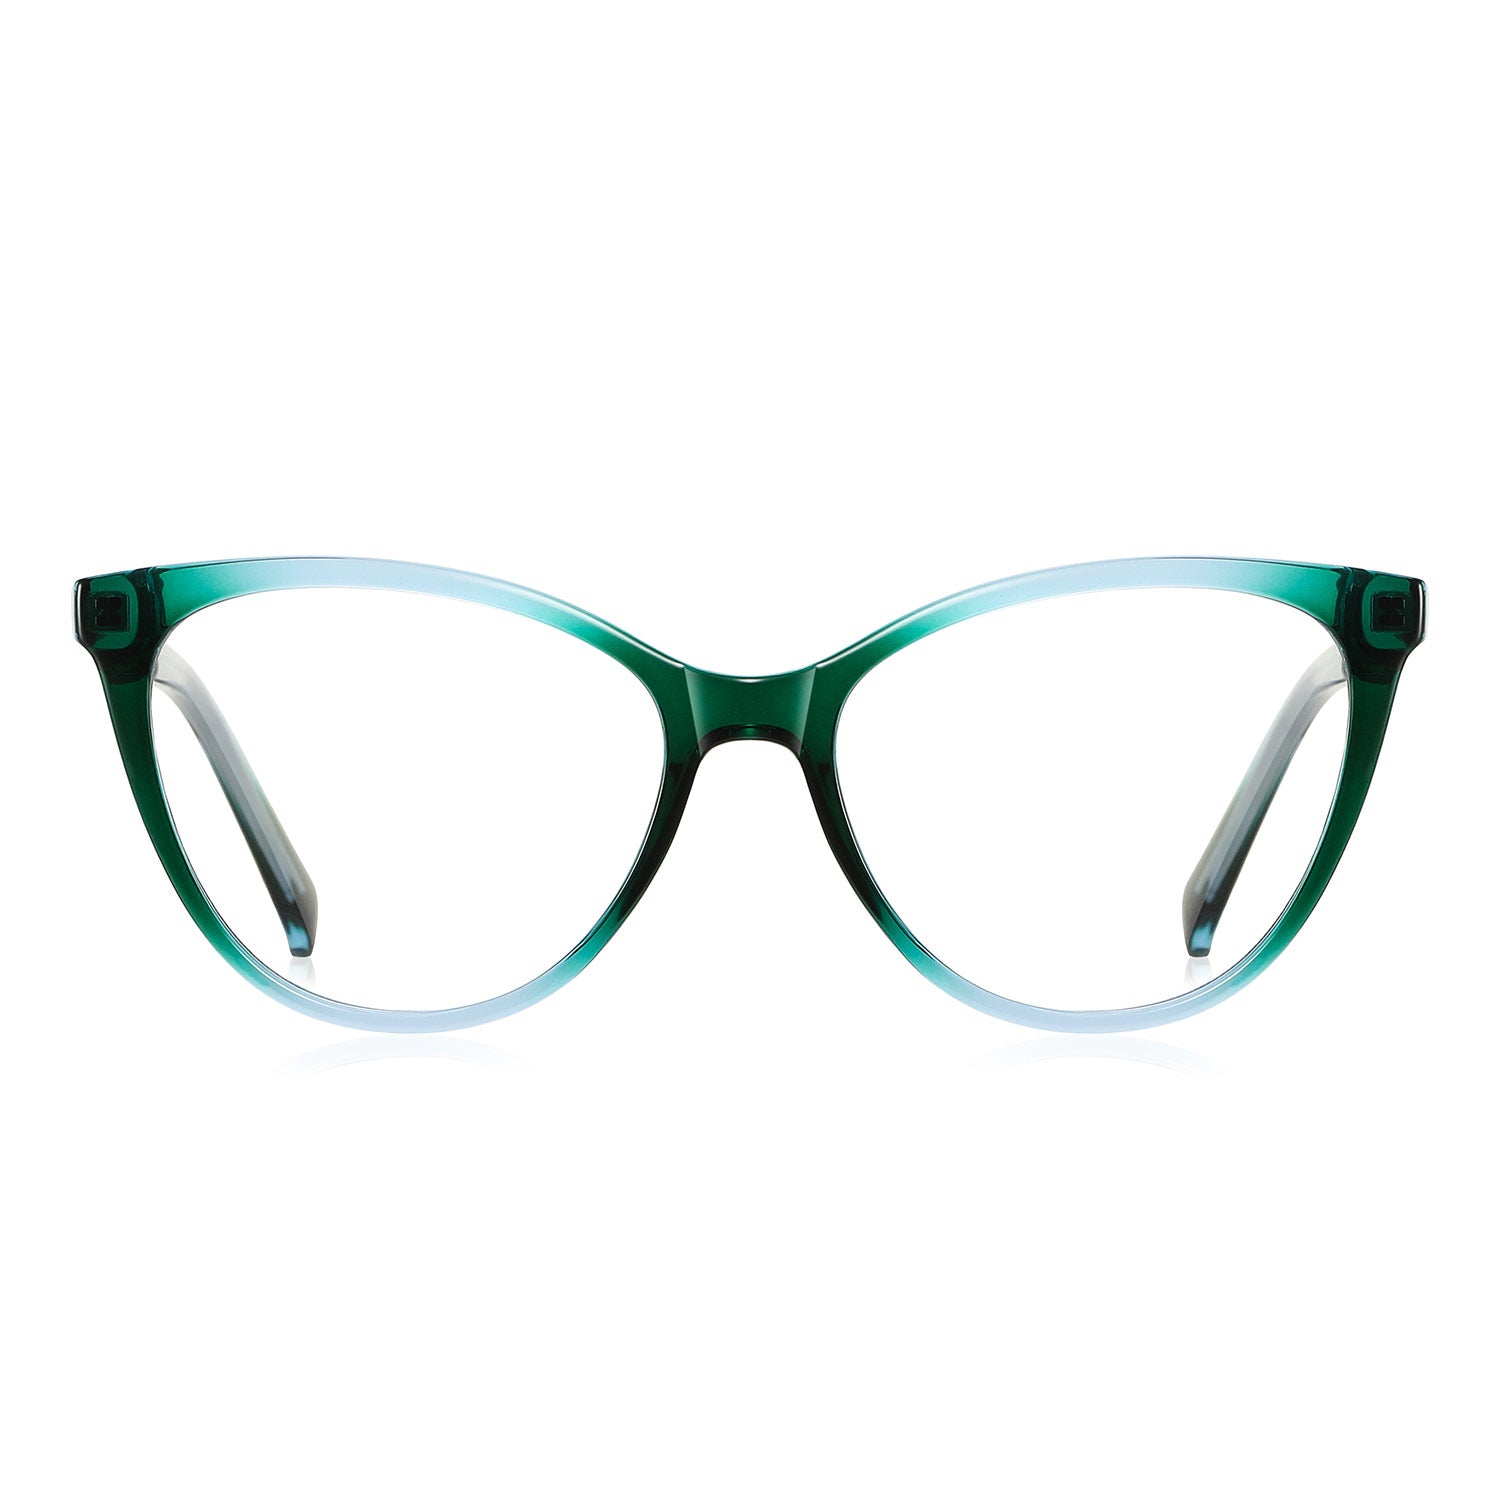 Bace | Square/Green/TR90 - Eyeglasses | ELKLOOK